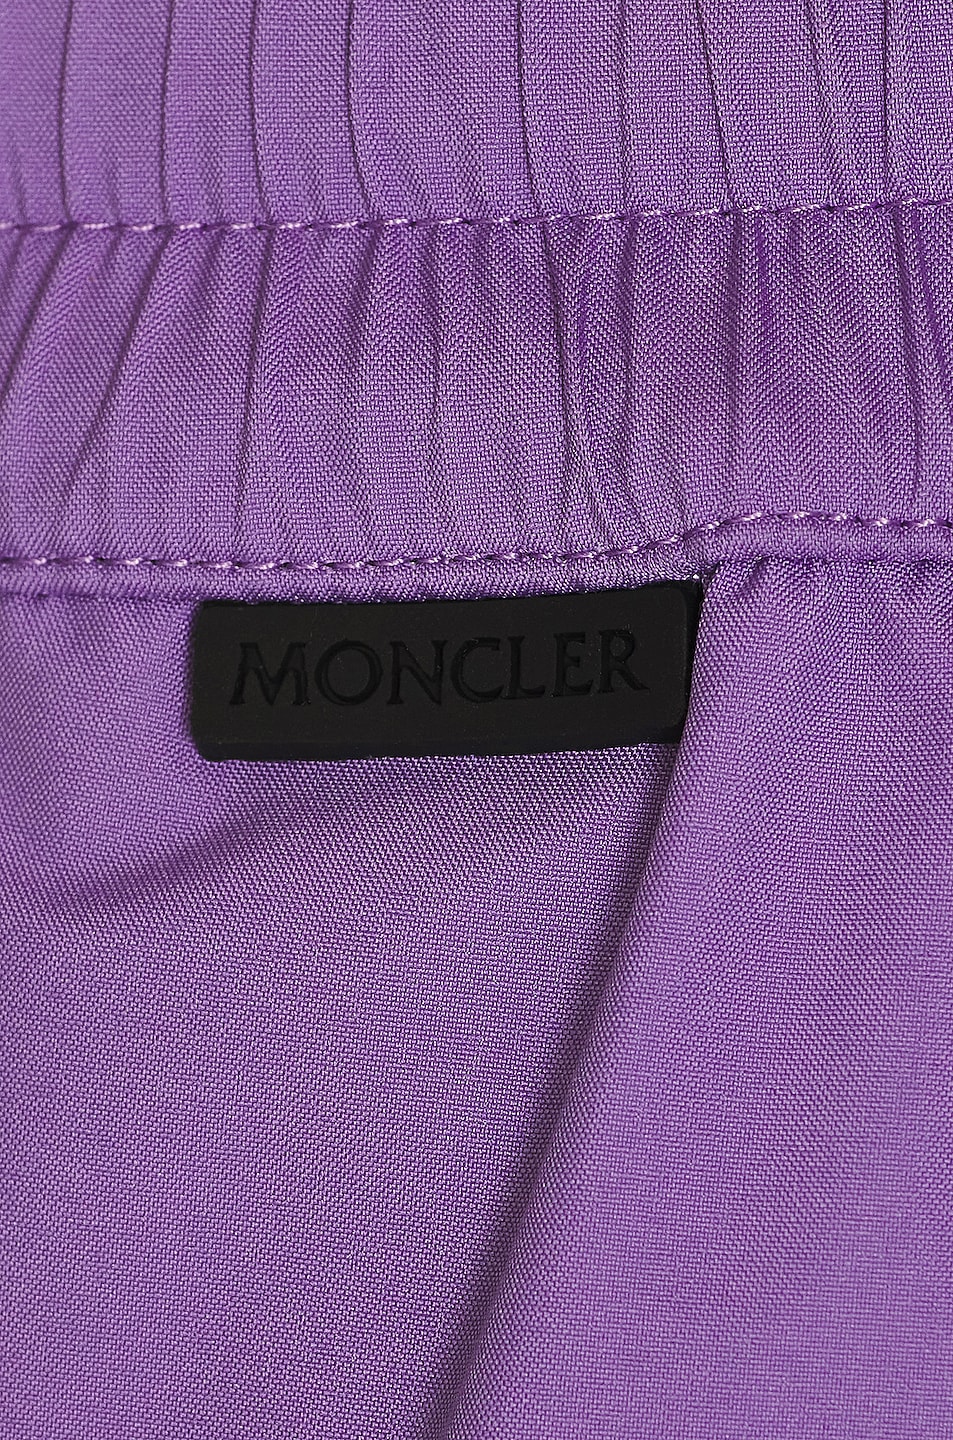 Moncler Grenoble Jogger Pant in Lavender | FWRD